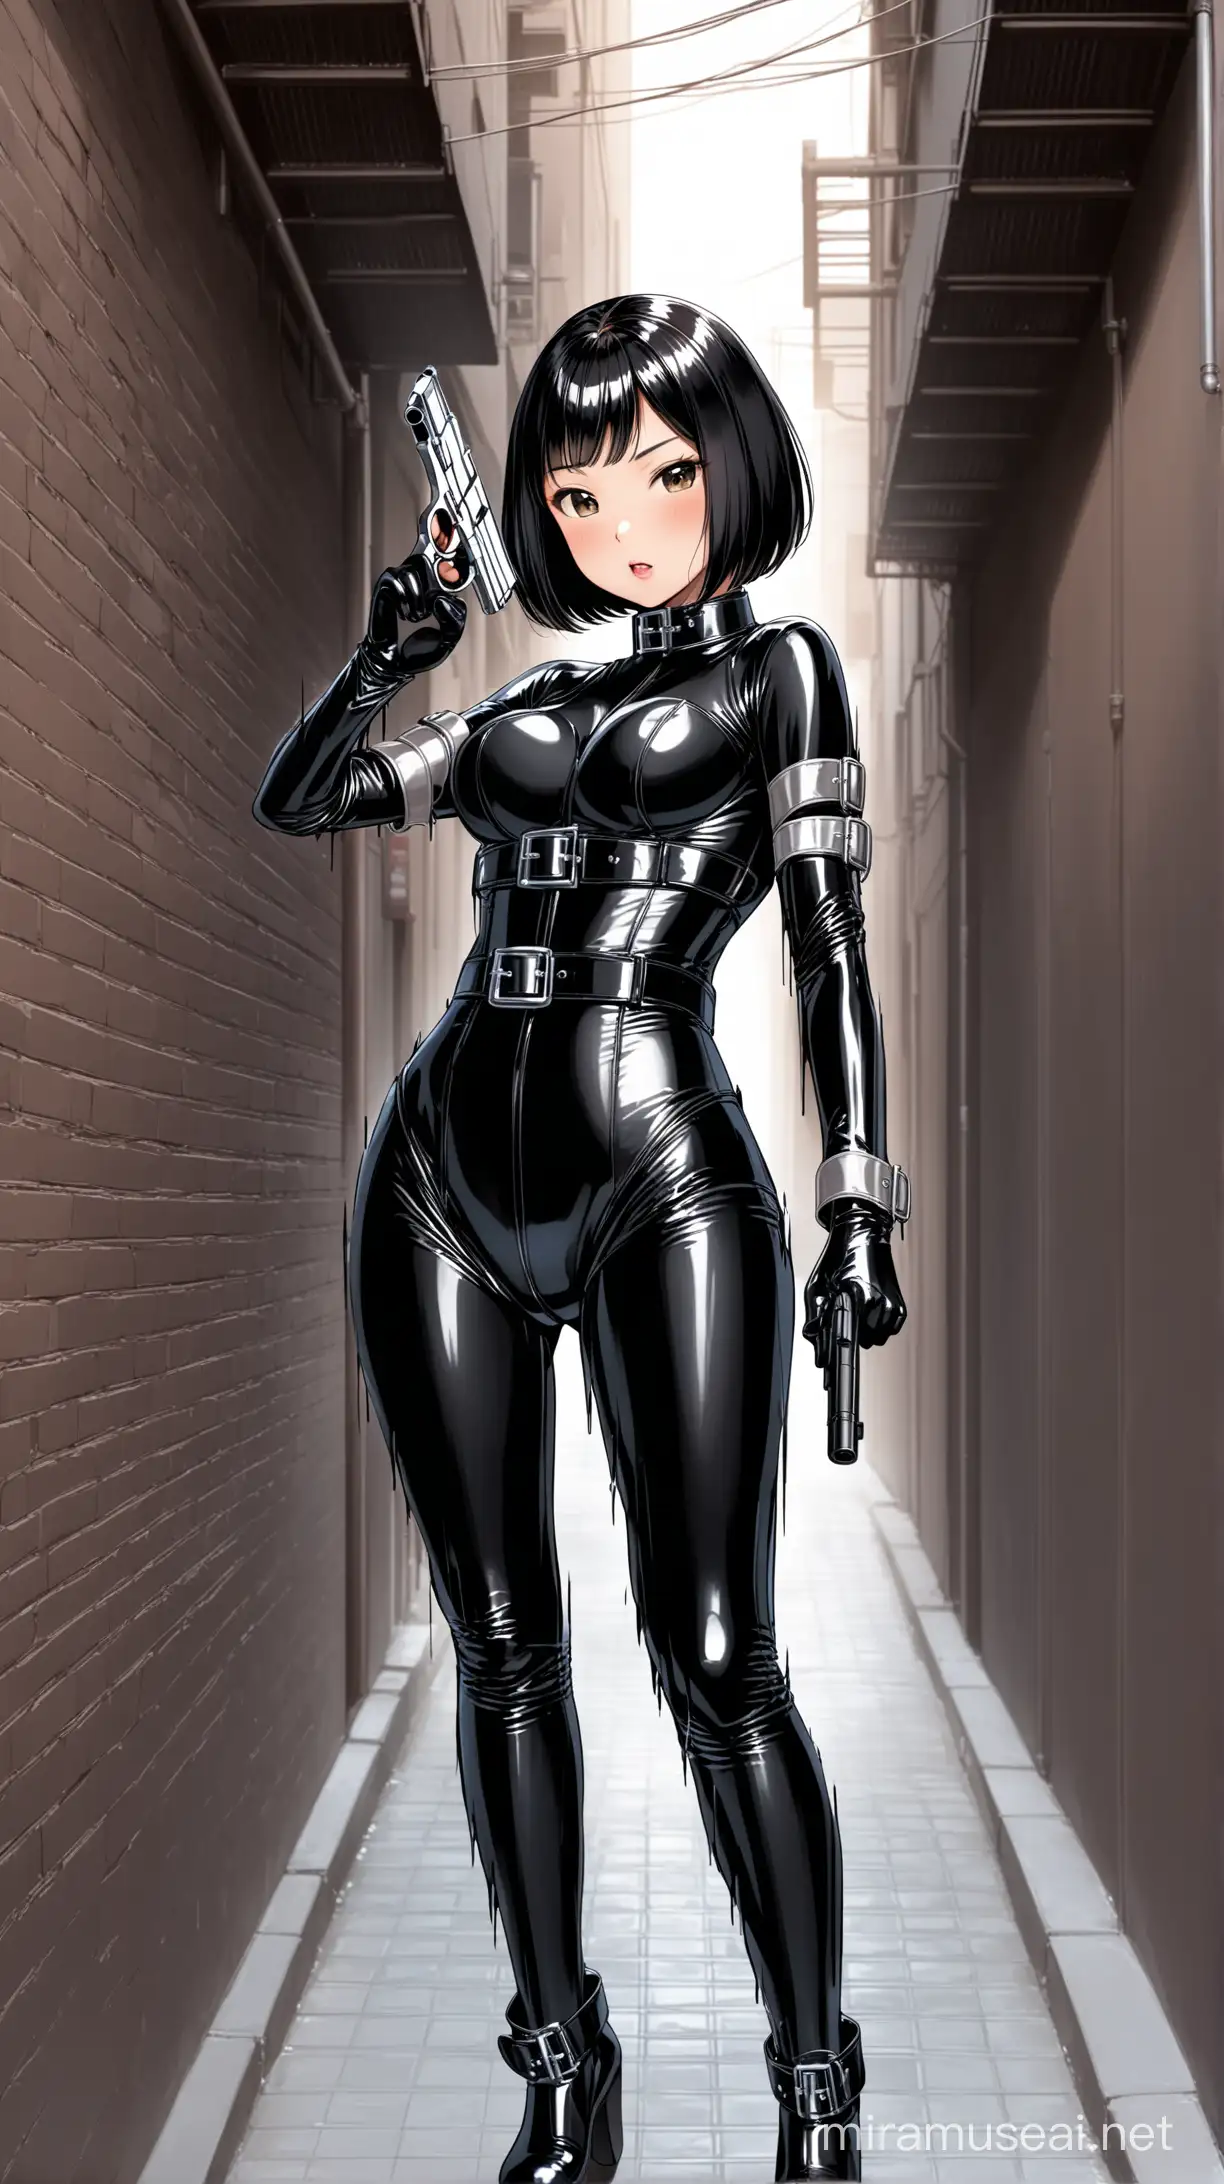 Fetish Fashion Asian Woman Aiming Pistol in Shiny Black Catsuit